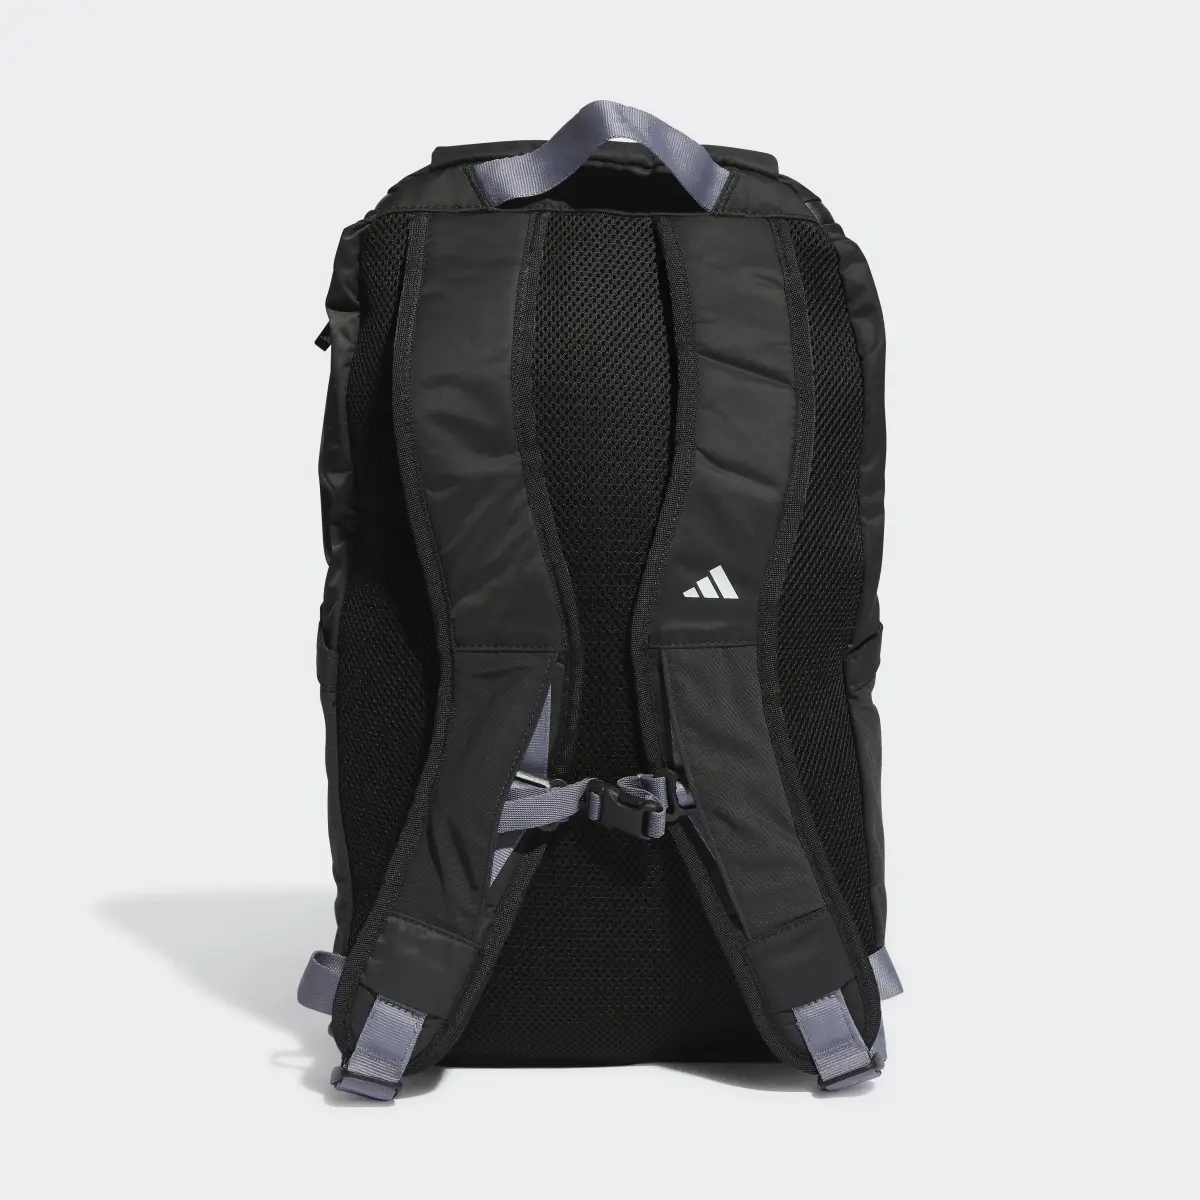 Adidas Designed for Training Gym Rucksack. 3